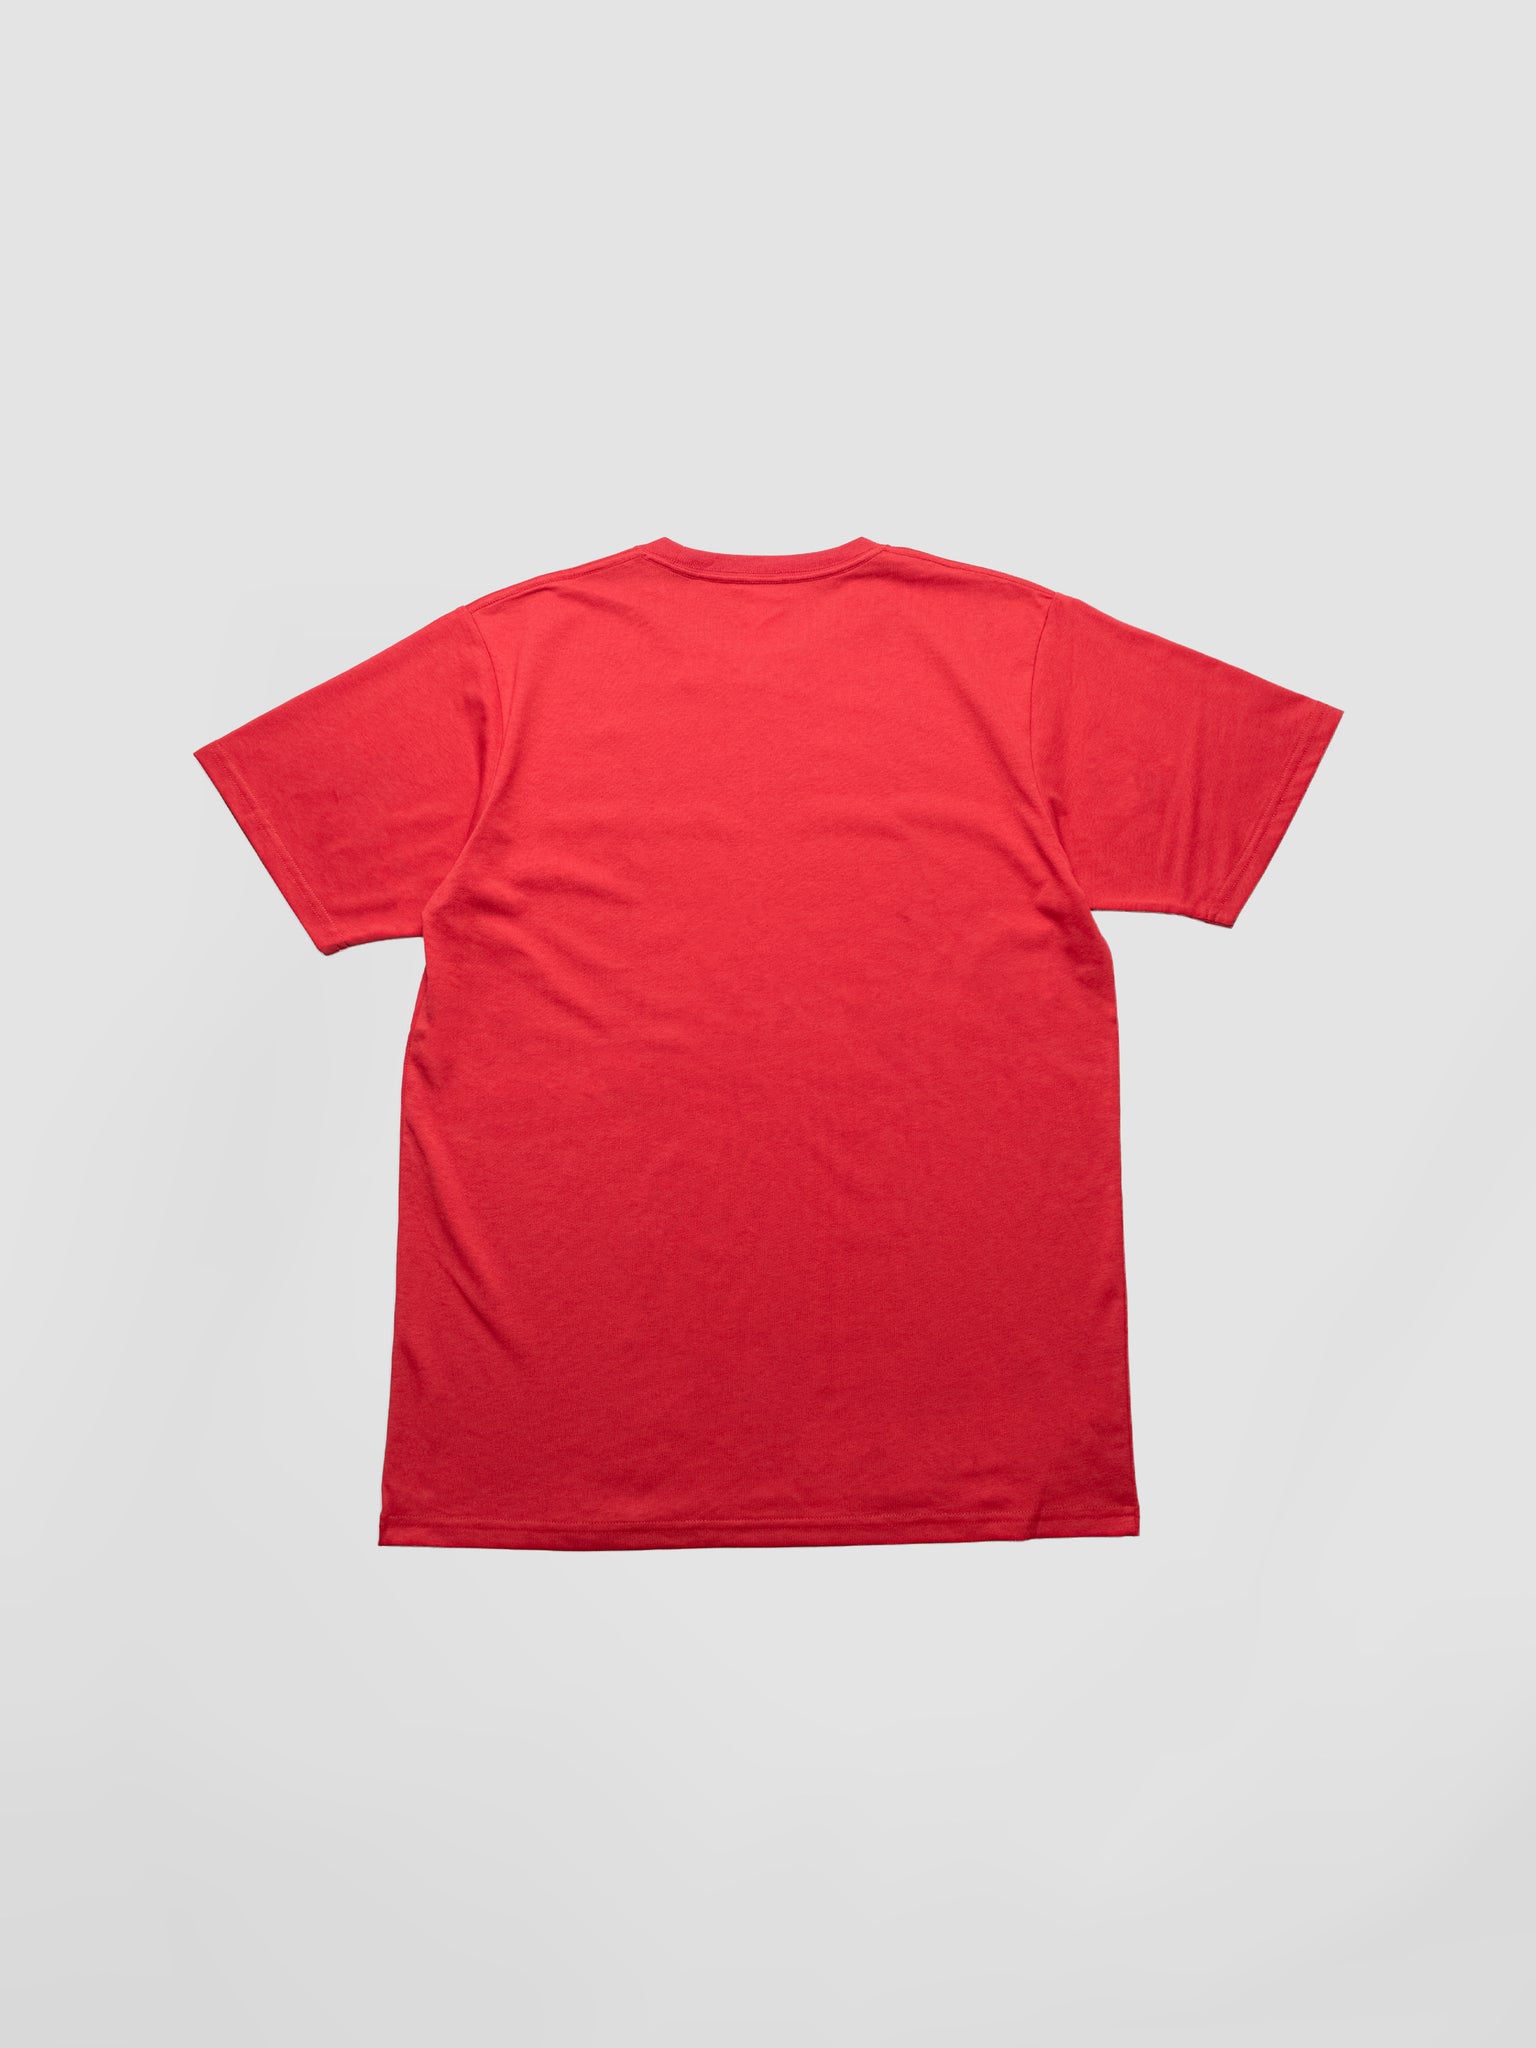 BLANK - Standard Fit T-Shirt Fire Whirl - v2